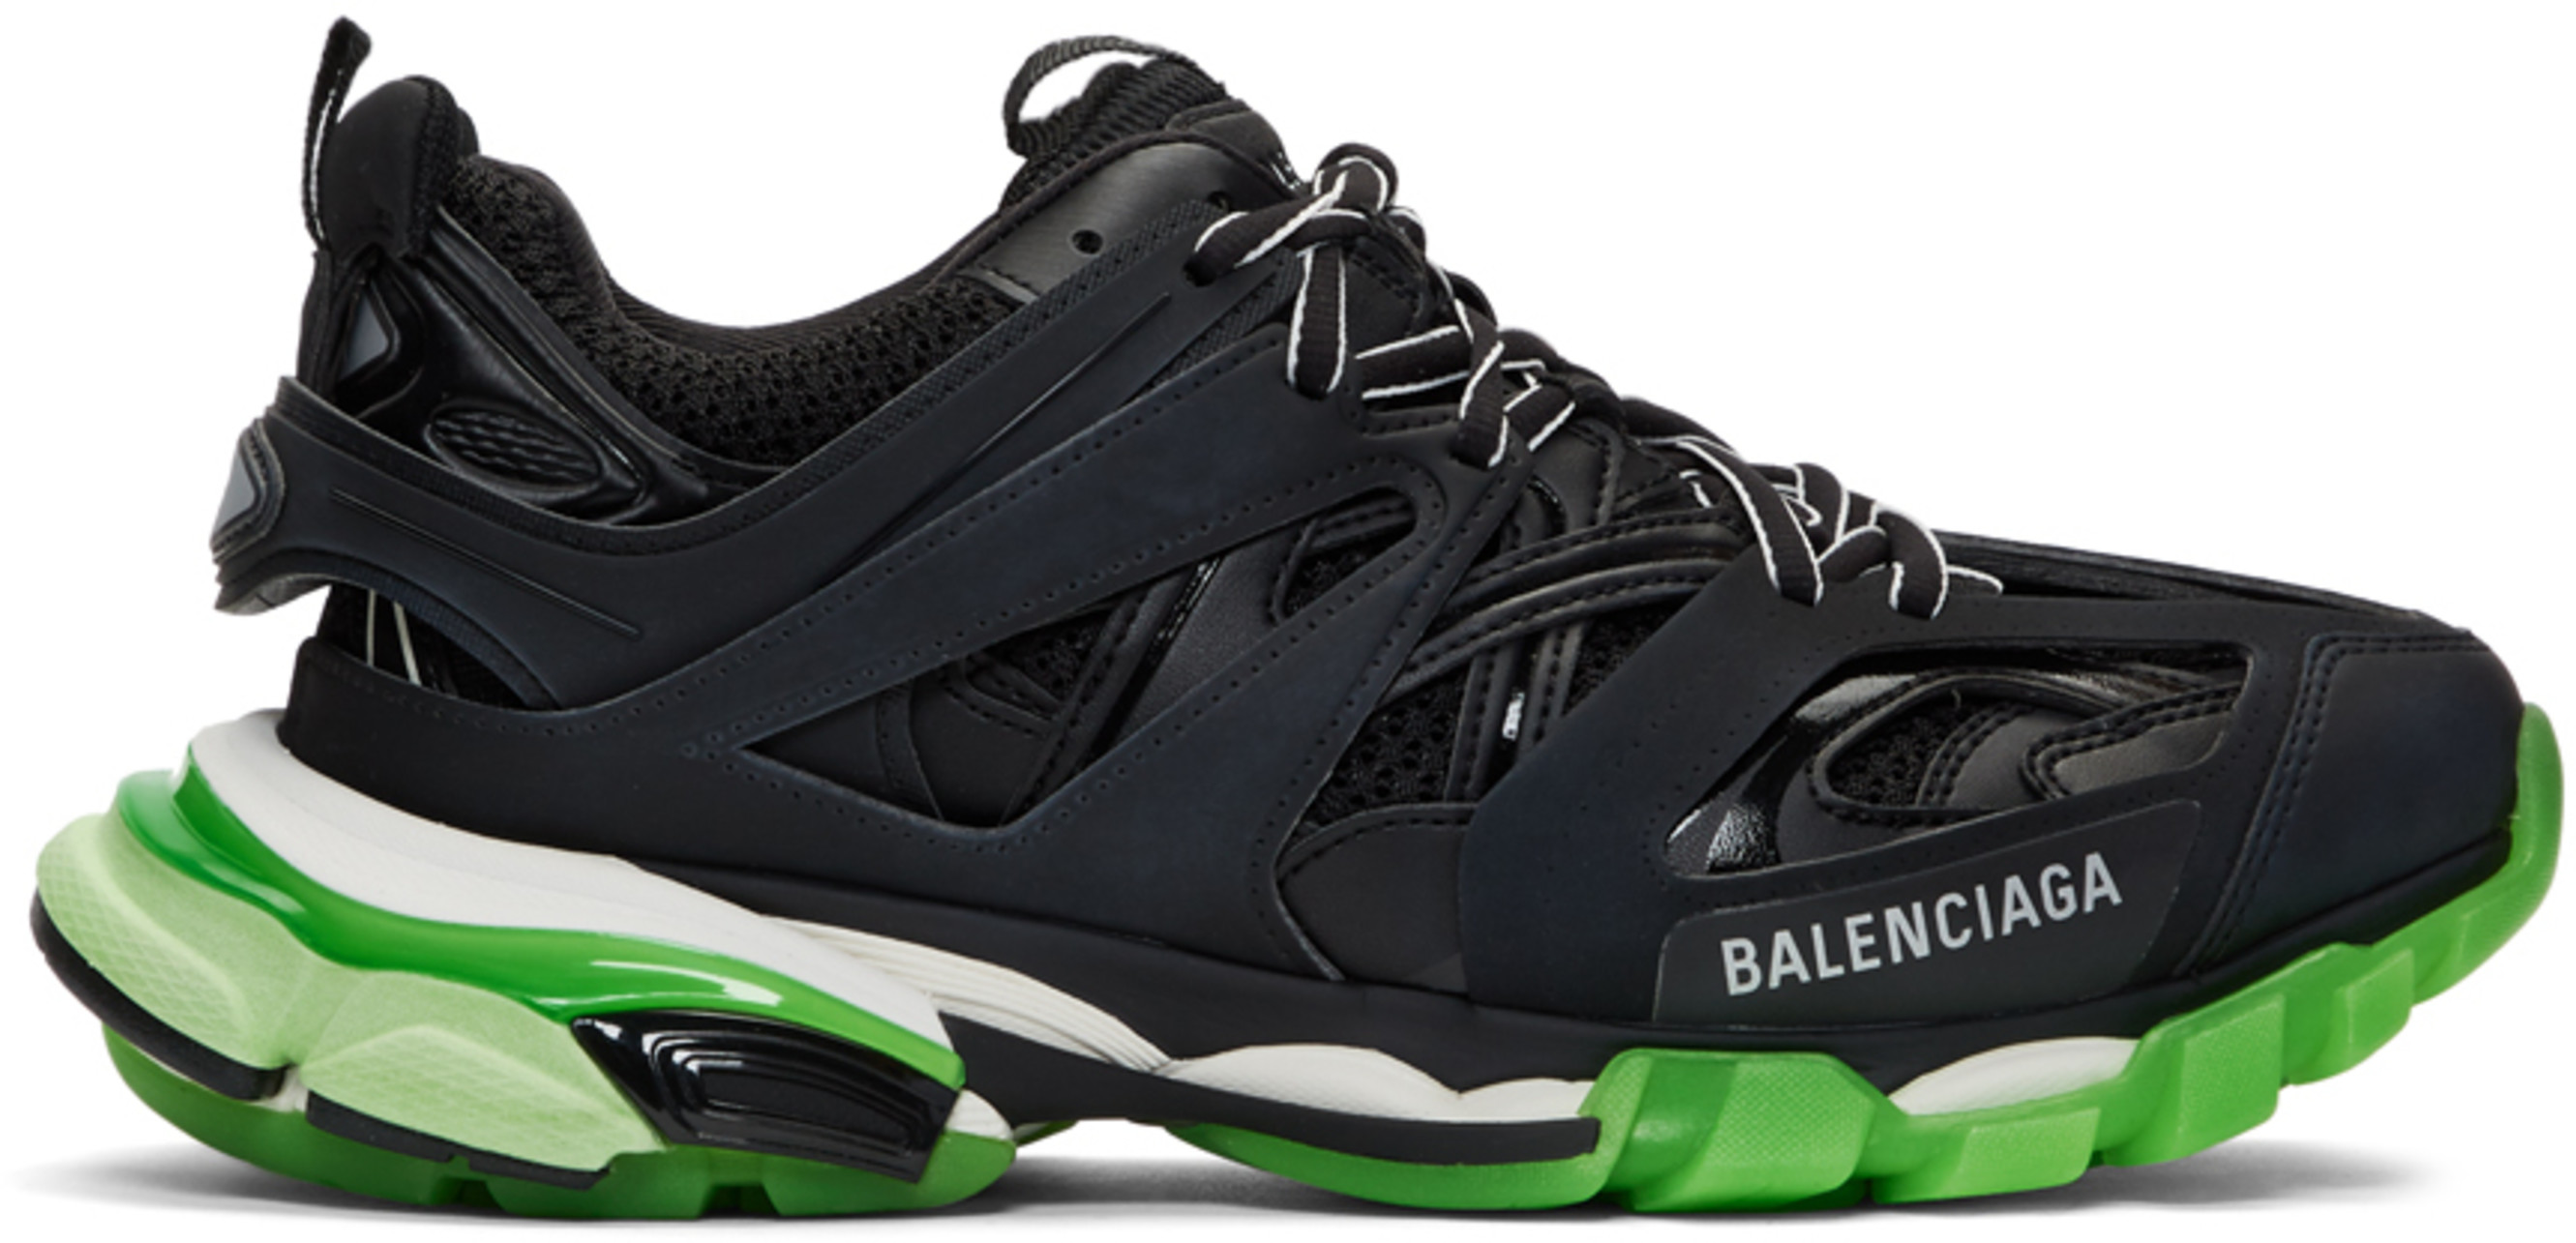 [Nelly]Balenciaga Track s 3.0 2019 New collection soft sole